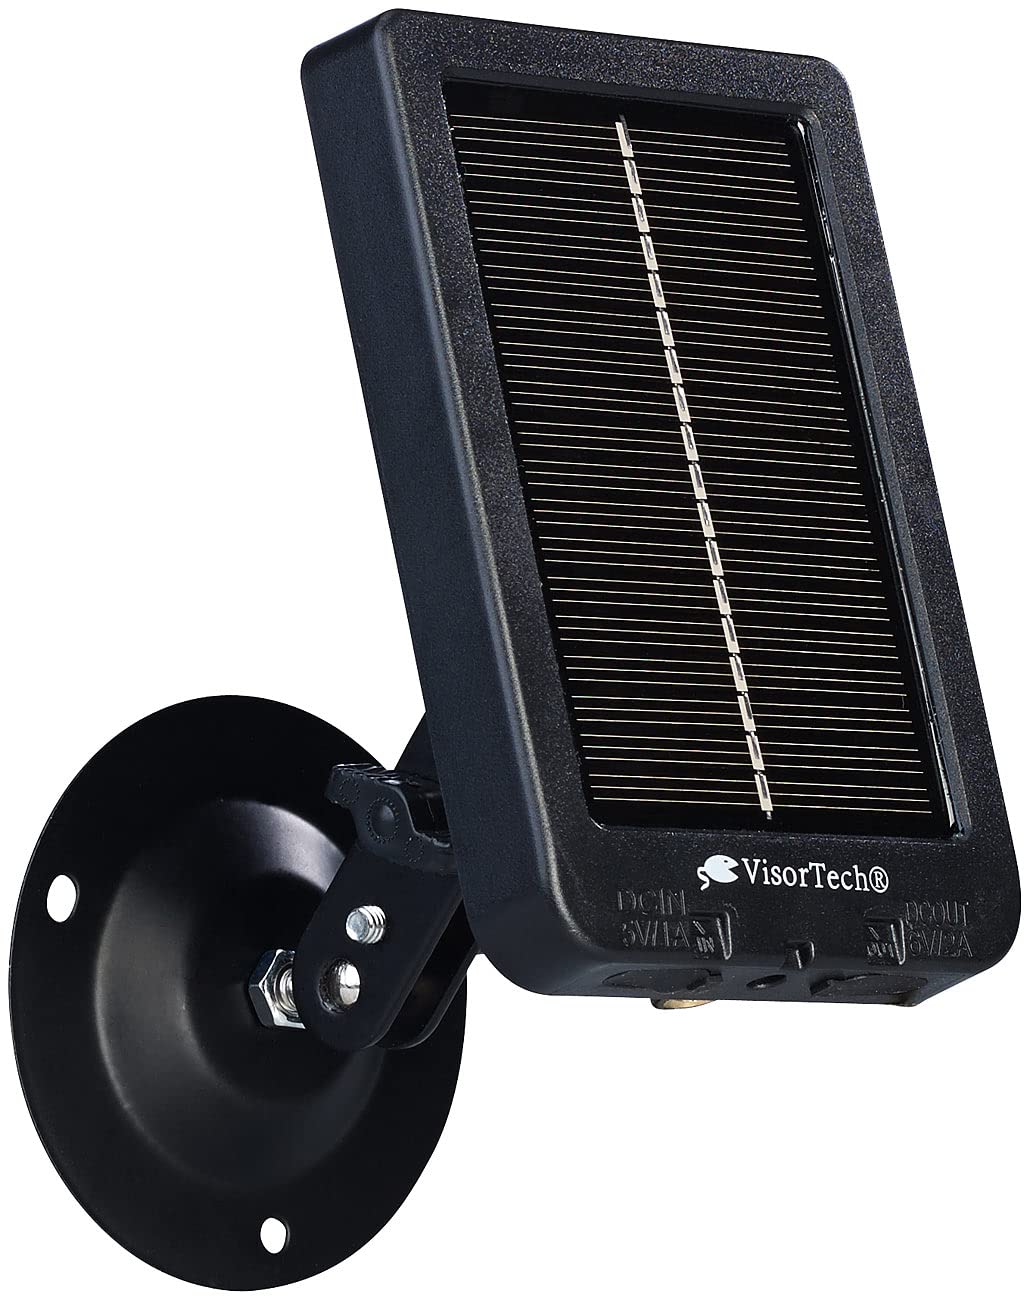 VisorTech Solarpanel Wildkamera: Mobiles Akku-Solarpanel für Wildkameras, 3.000 mAh, IP65 (Wildkamera mit Solarmodul, Solar-Panel für Wildkameras, Überwachungskamera)